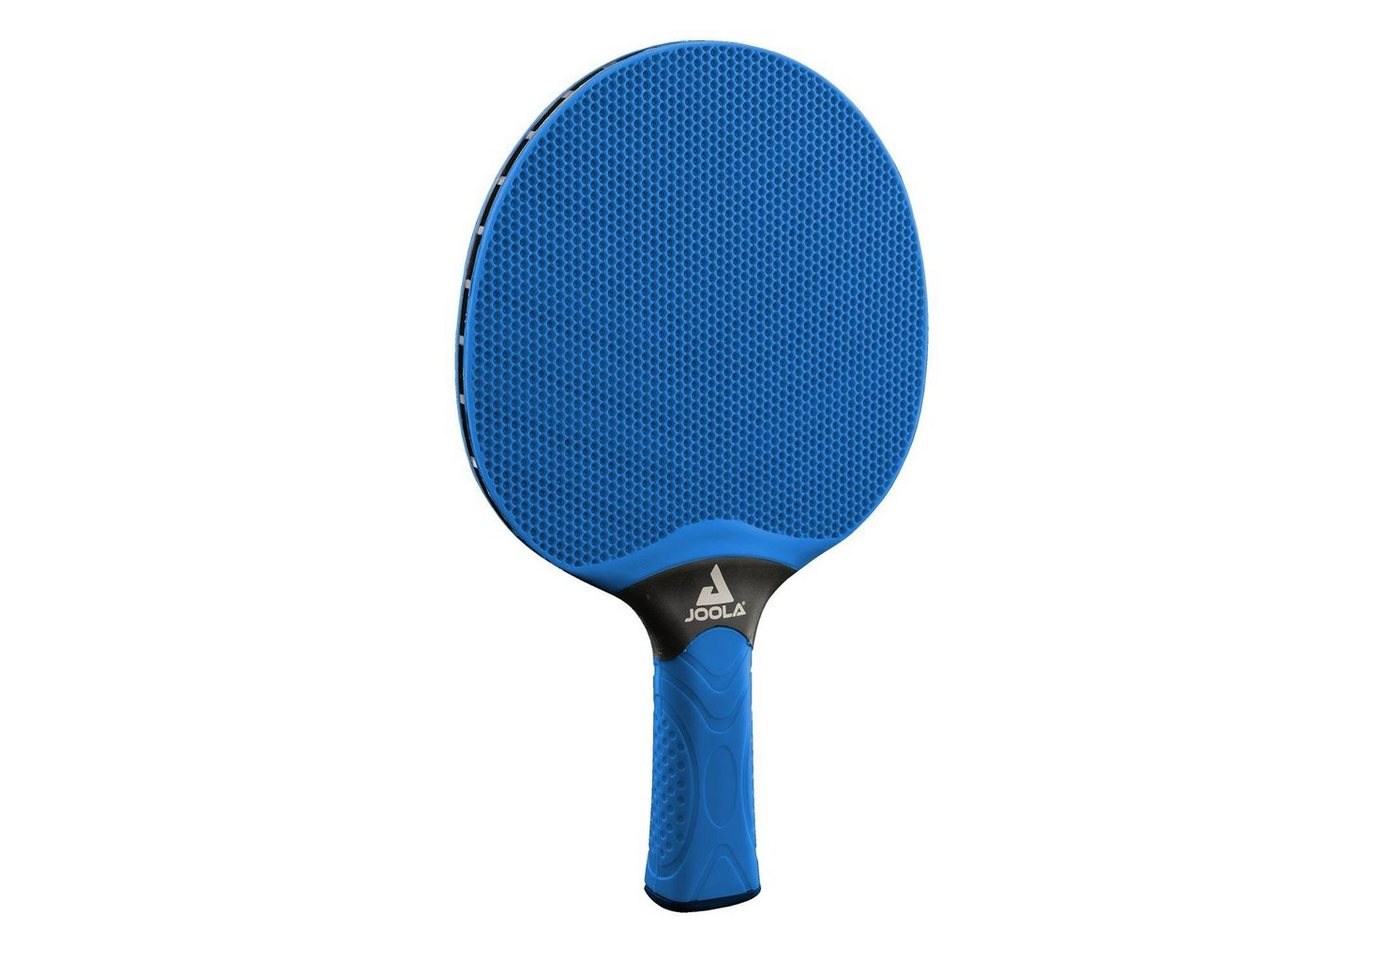 Joola Tischtennisschläger JOOLA Tischtennisschläger Vivid Outdoor Blau, Tischtennis Schläger Racket Table Tennis Bat von Joola